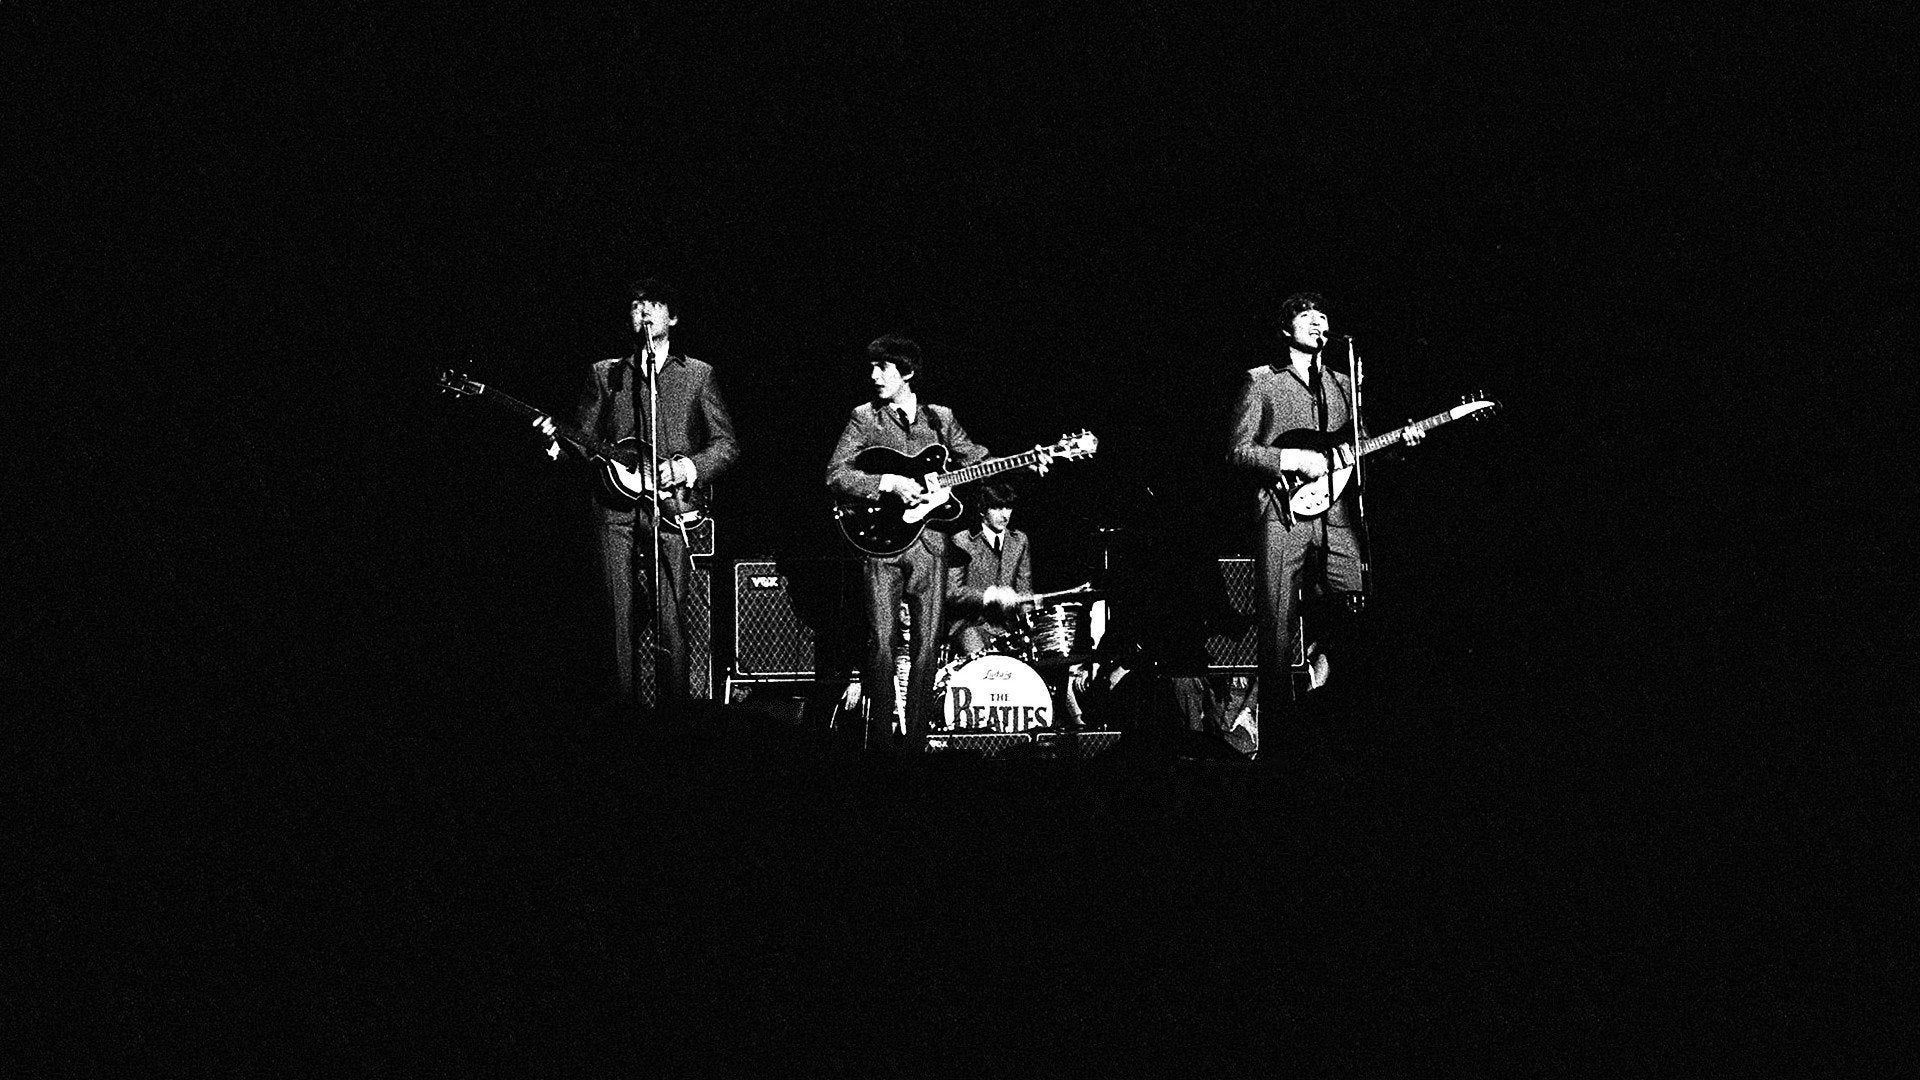 The Beatles In Washington [1920 x 1080]